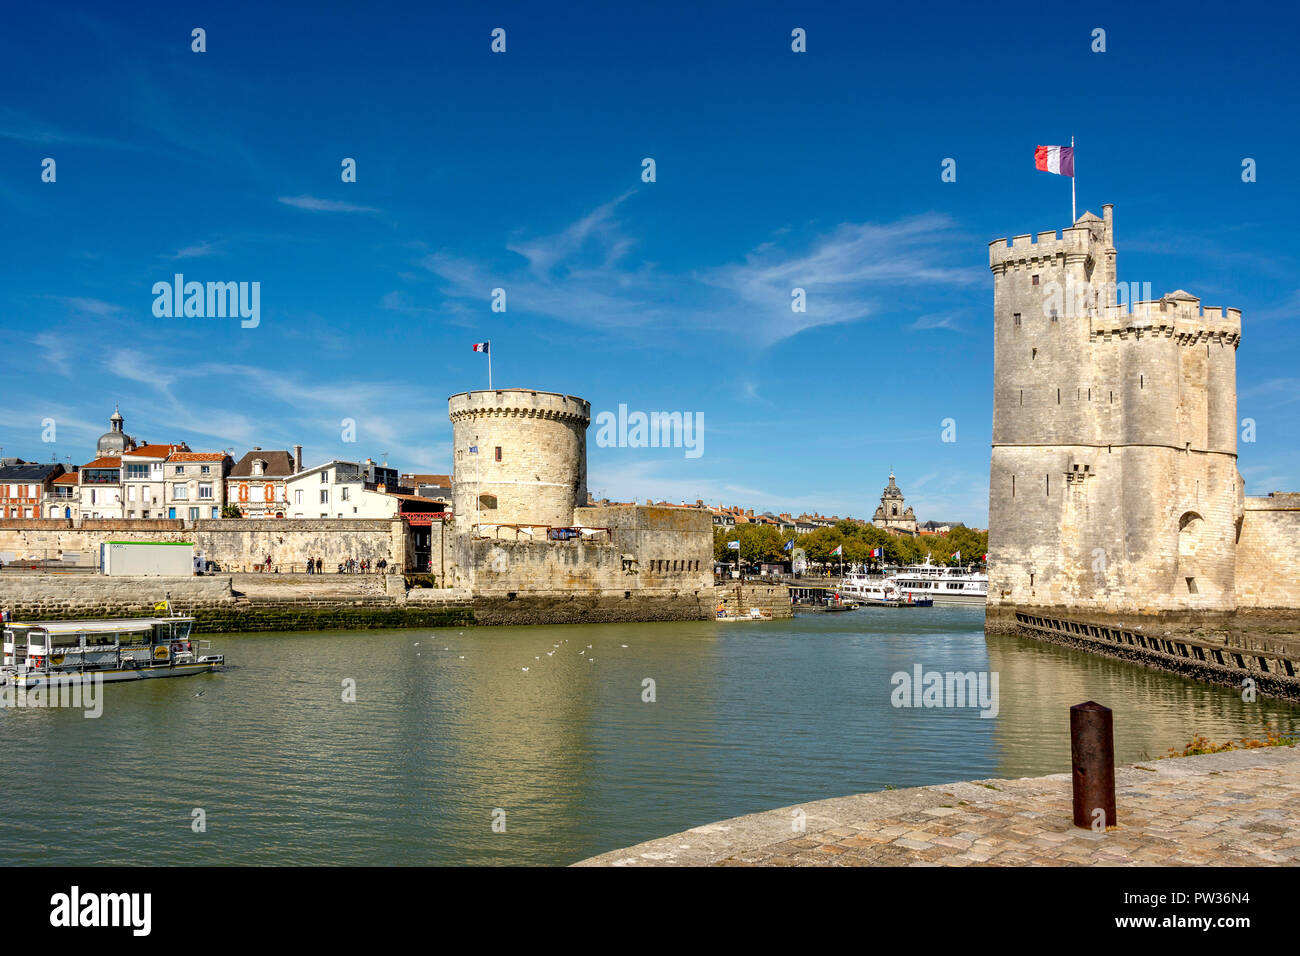 St Nicolas Tower (Tour Saint Nicolas) and The Chain Tower (Tour de la Chaine) at the entrance to the ancient port of La Rochelle, Charente Maritime,   Stock Photo